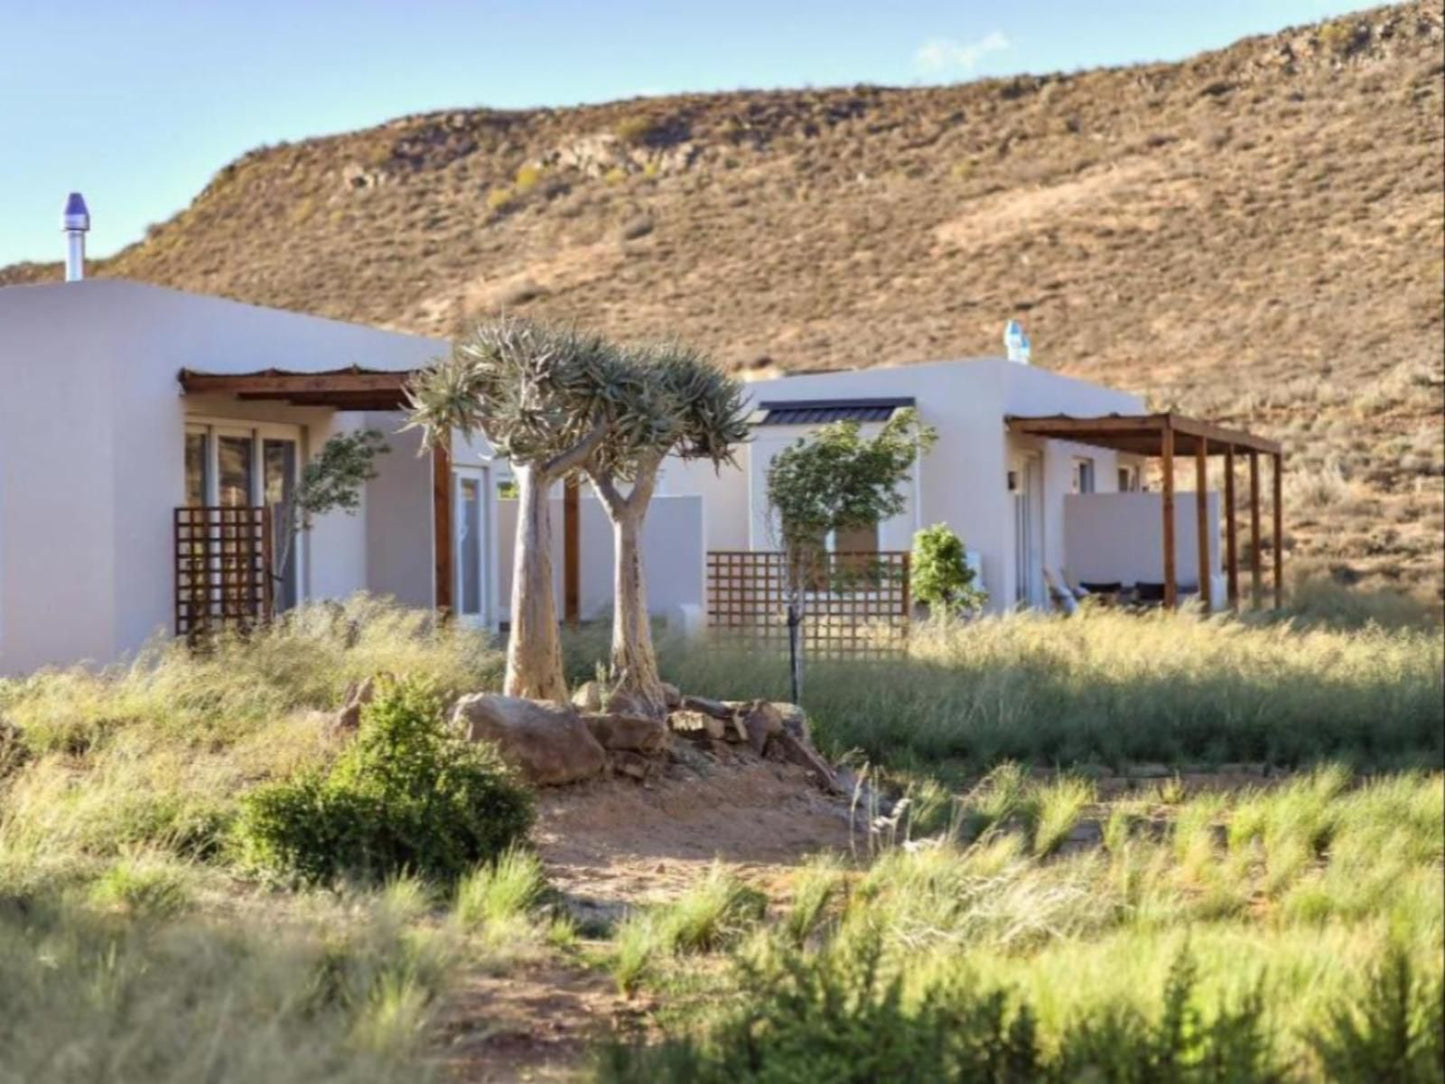 Cederberg Ridge Wilderness Lodge Clanwilliam Western Cape South Africa House, Building, Architecture, Desert, Nature, Sand